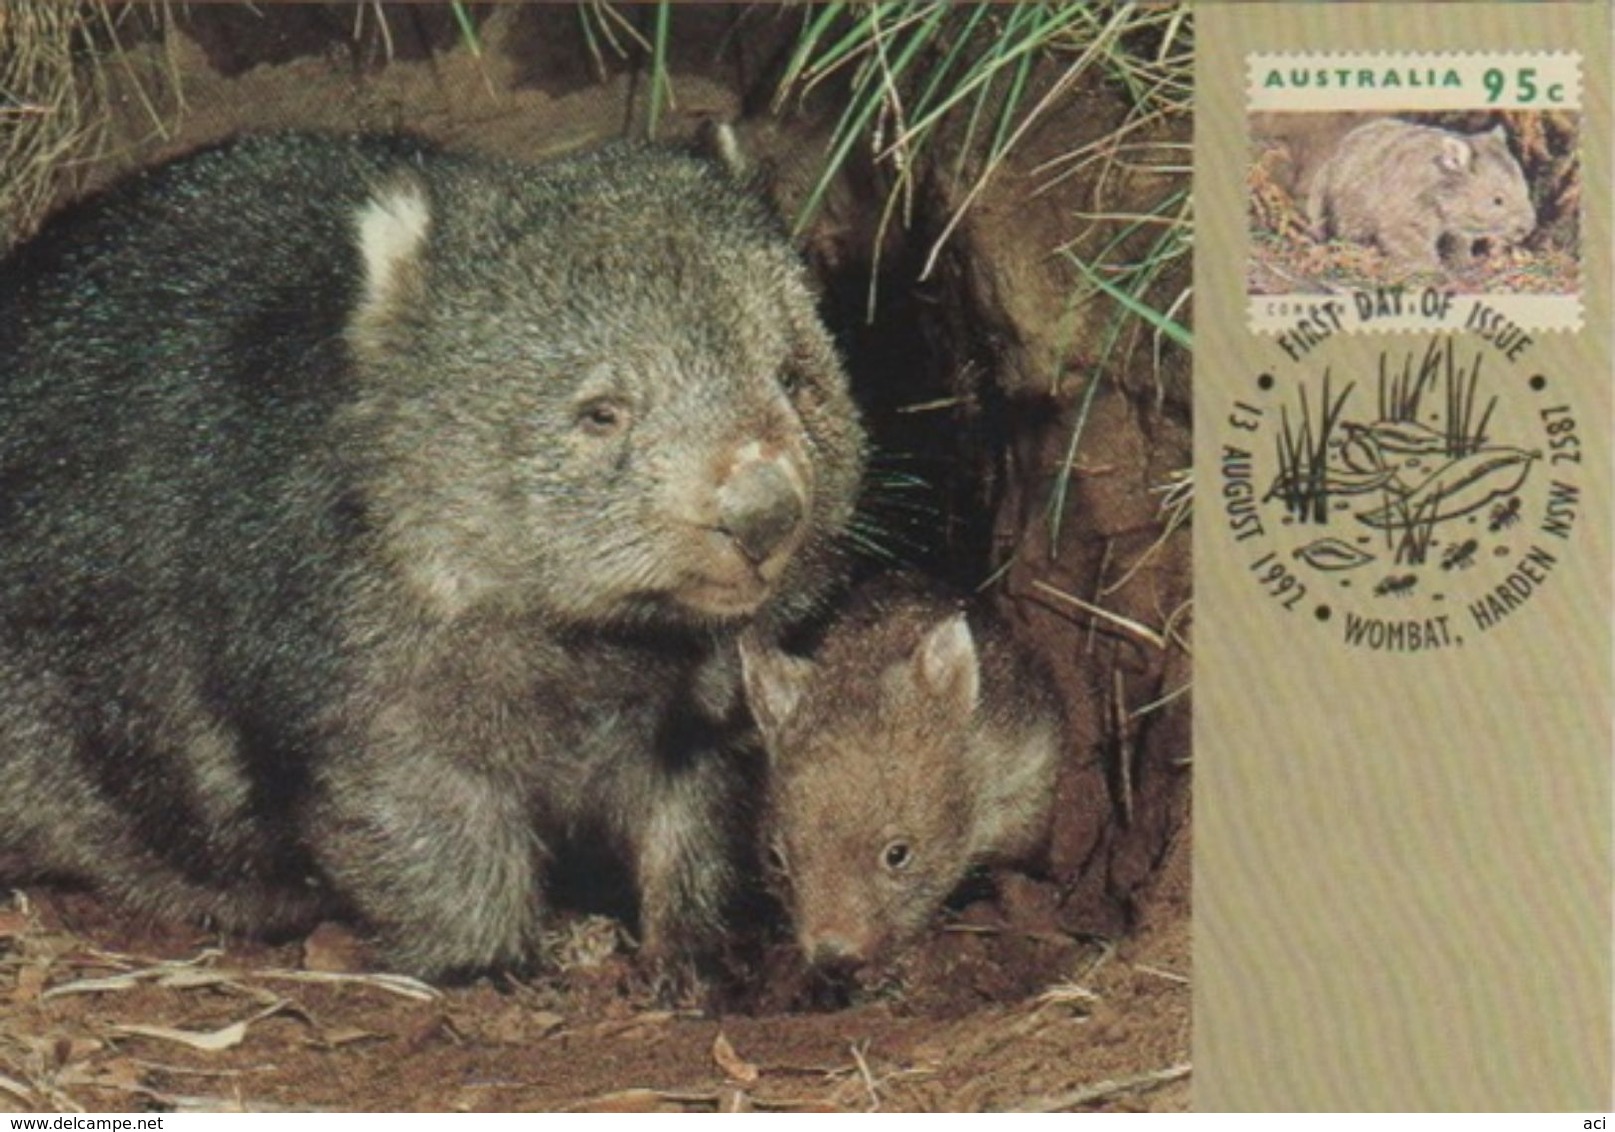 Australia 2017 Postally Used Maximum Card,sent To Italy,1992 Australain Wildlife,Common Wombat - Maximum Cards